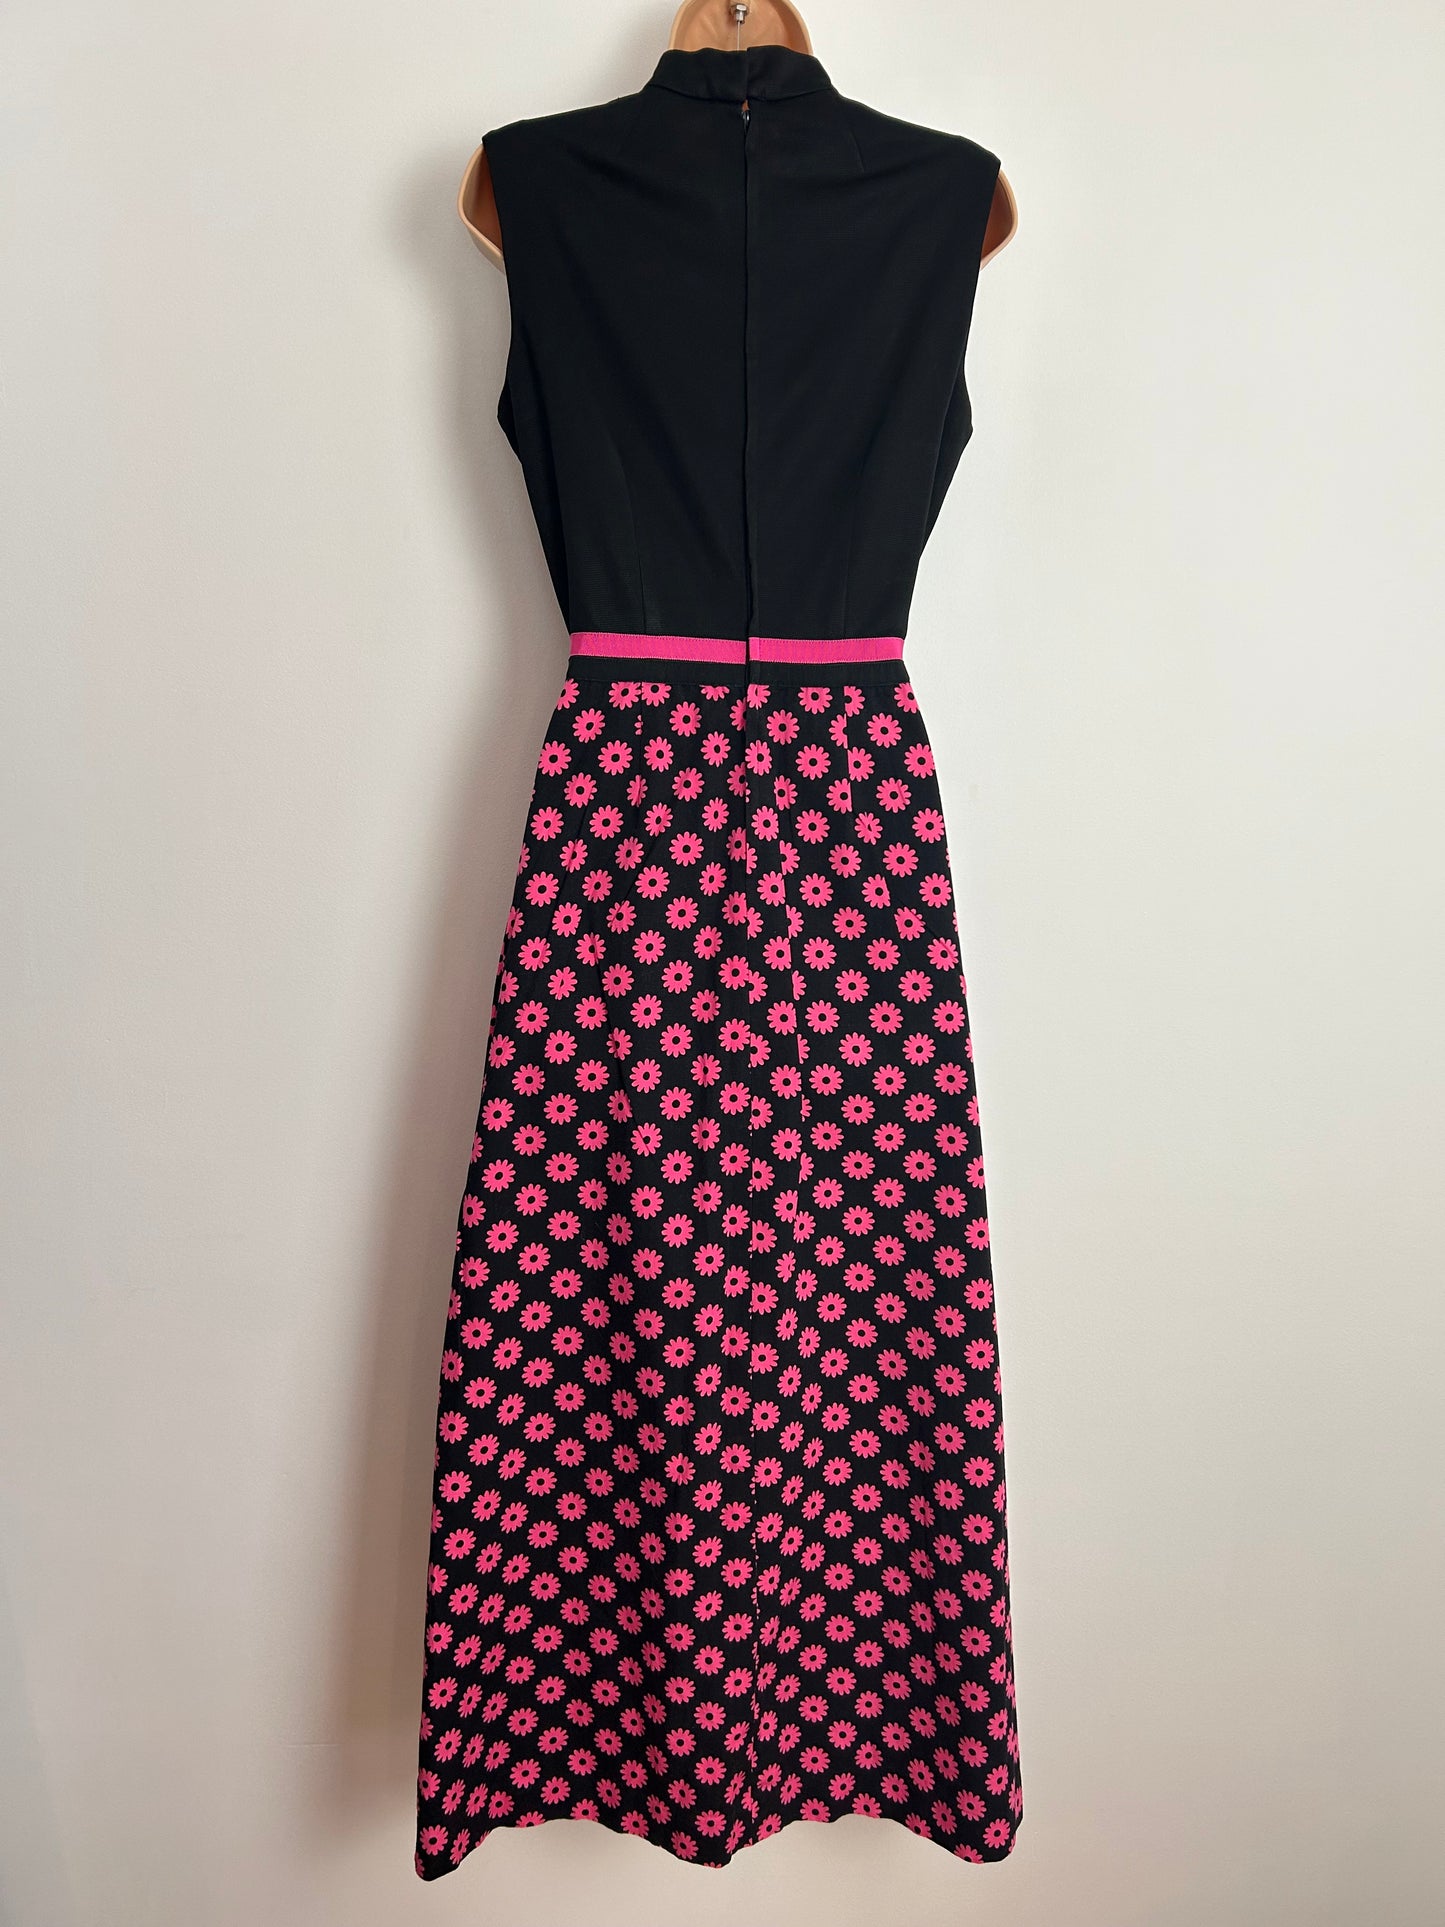 Vintage 1970s UK Size 10 Black & Pink Daisy Floral Sleeveless Boho Maxi Dress by DONNA GAY